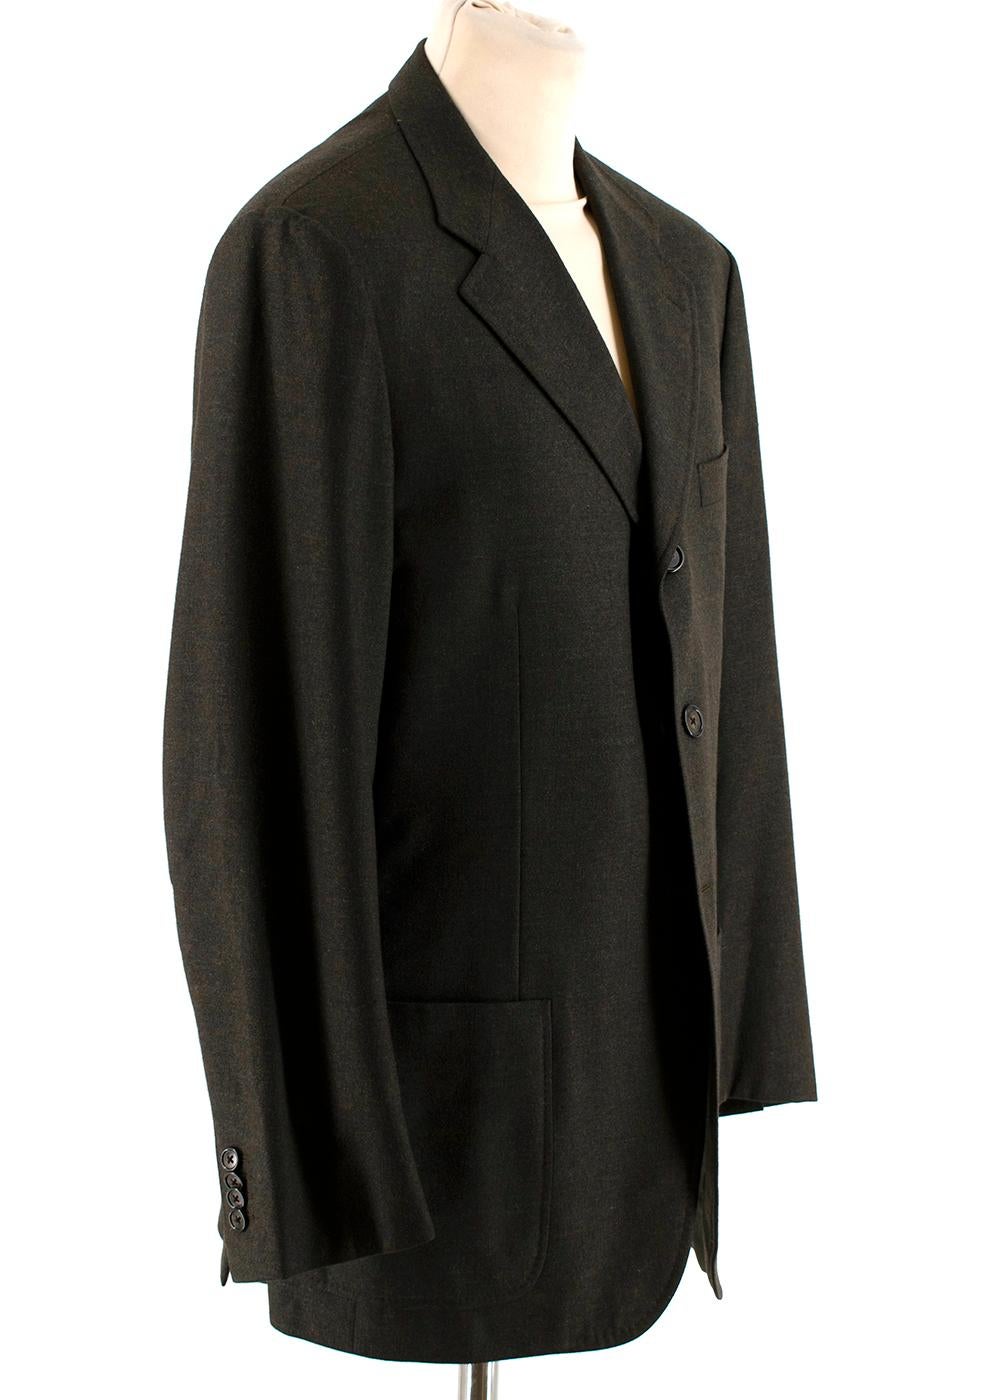 Corneliani Brown/Grey Wool & Cashmere Single Breasted Blazer - Size L EU50 For Sale 3